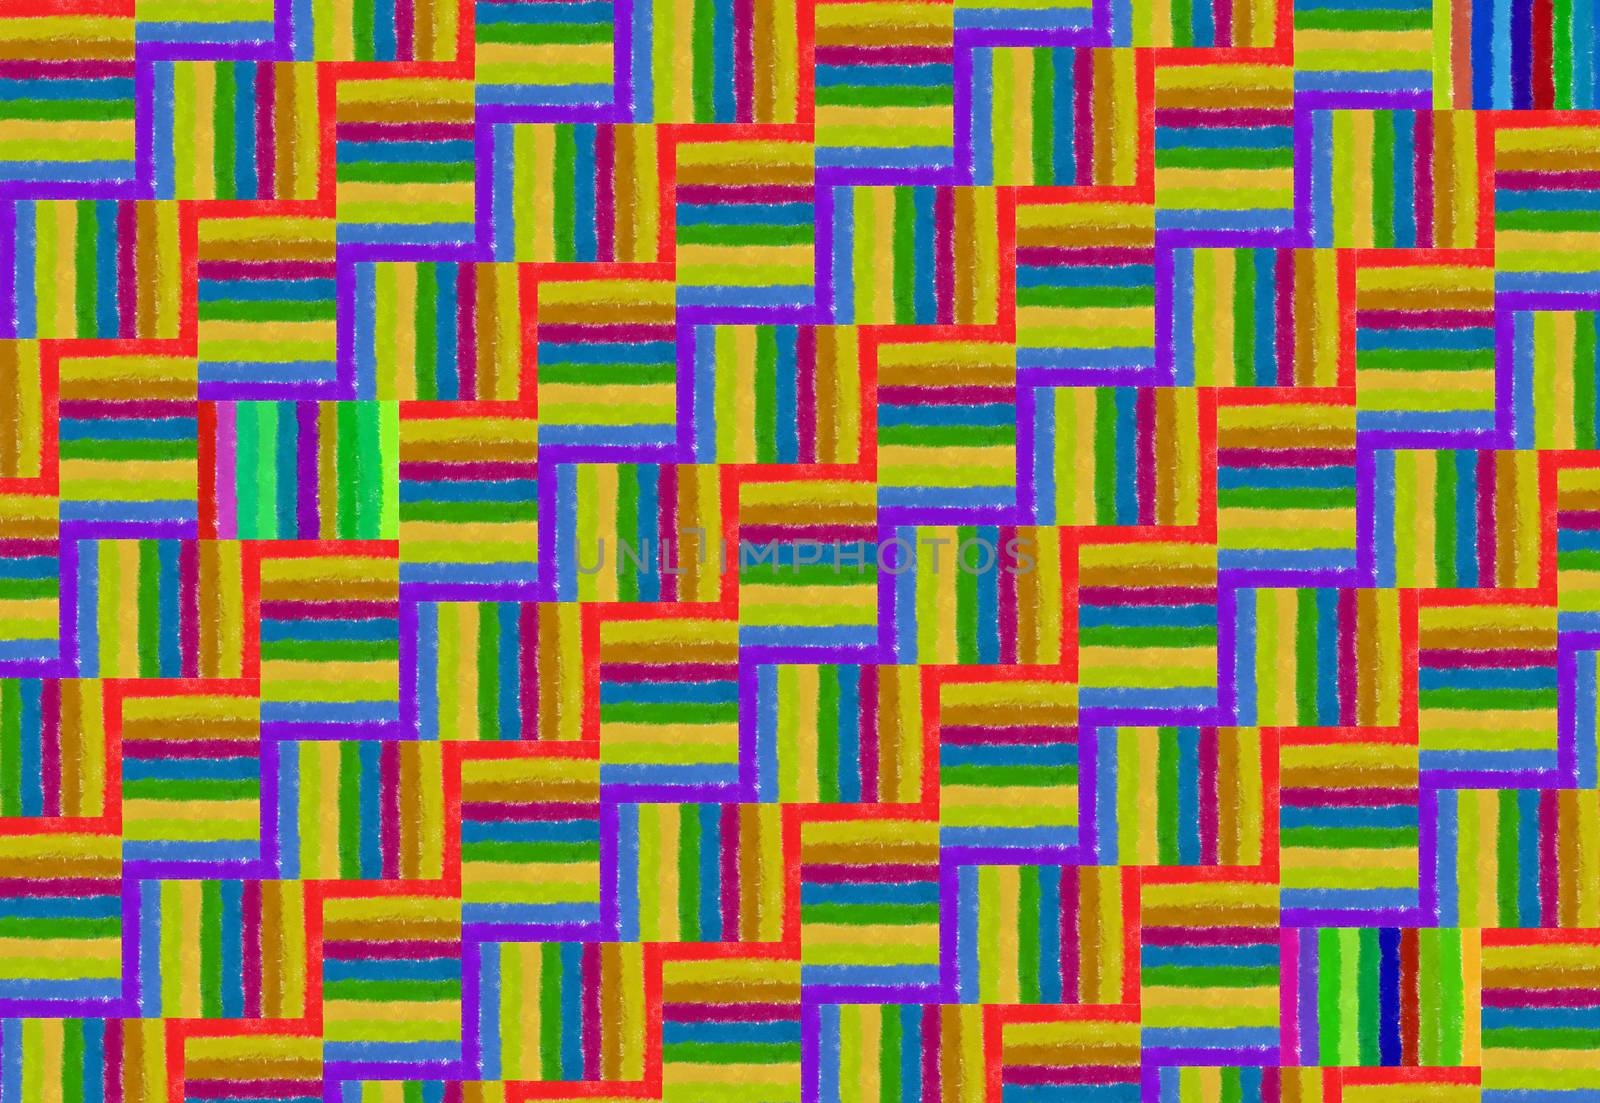 rainbow colors pattern